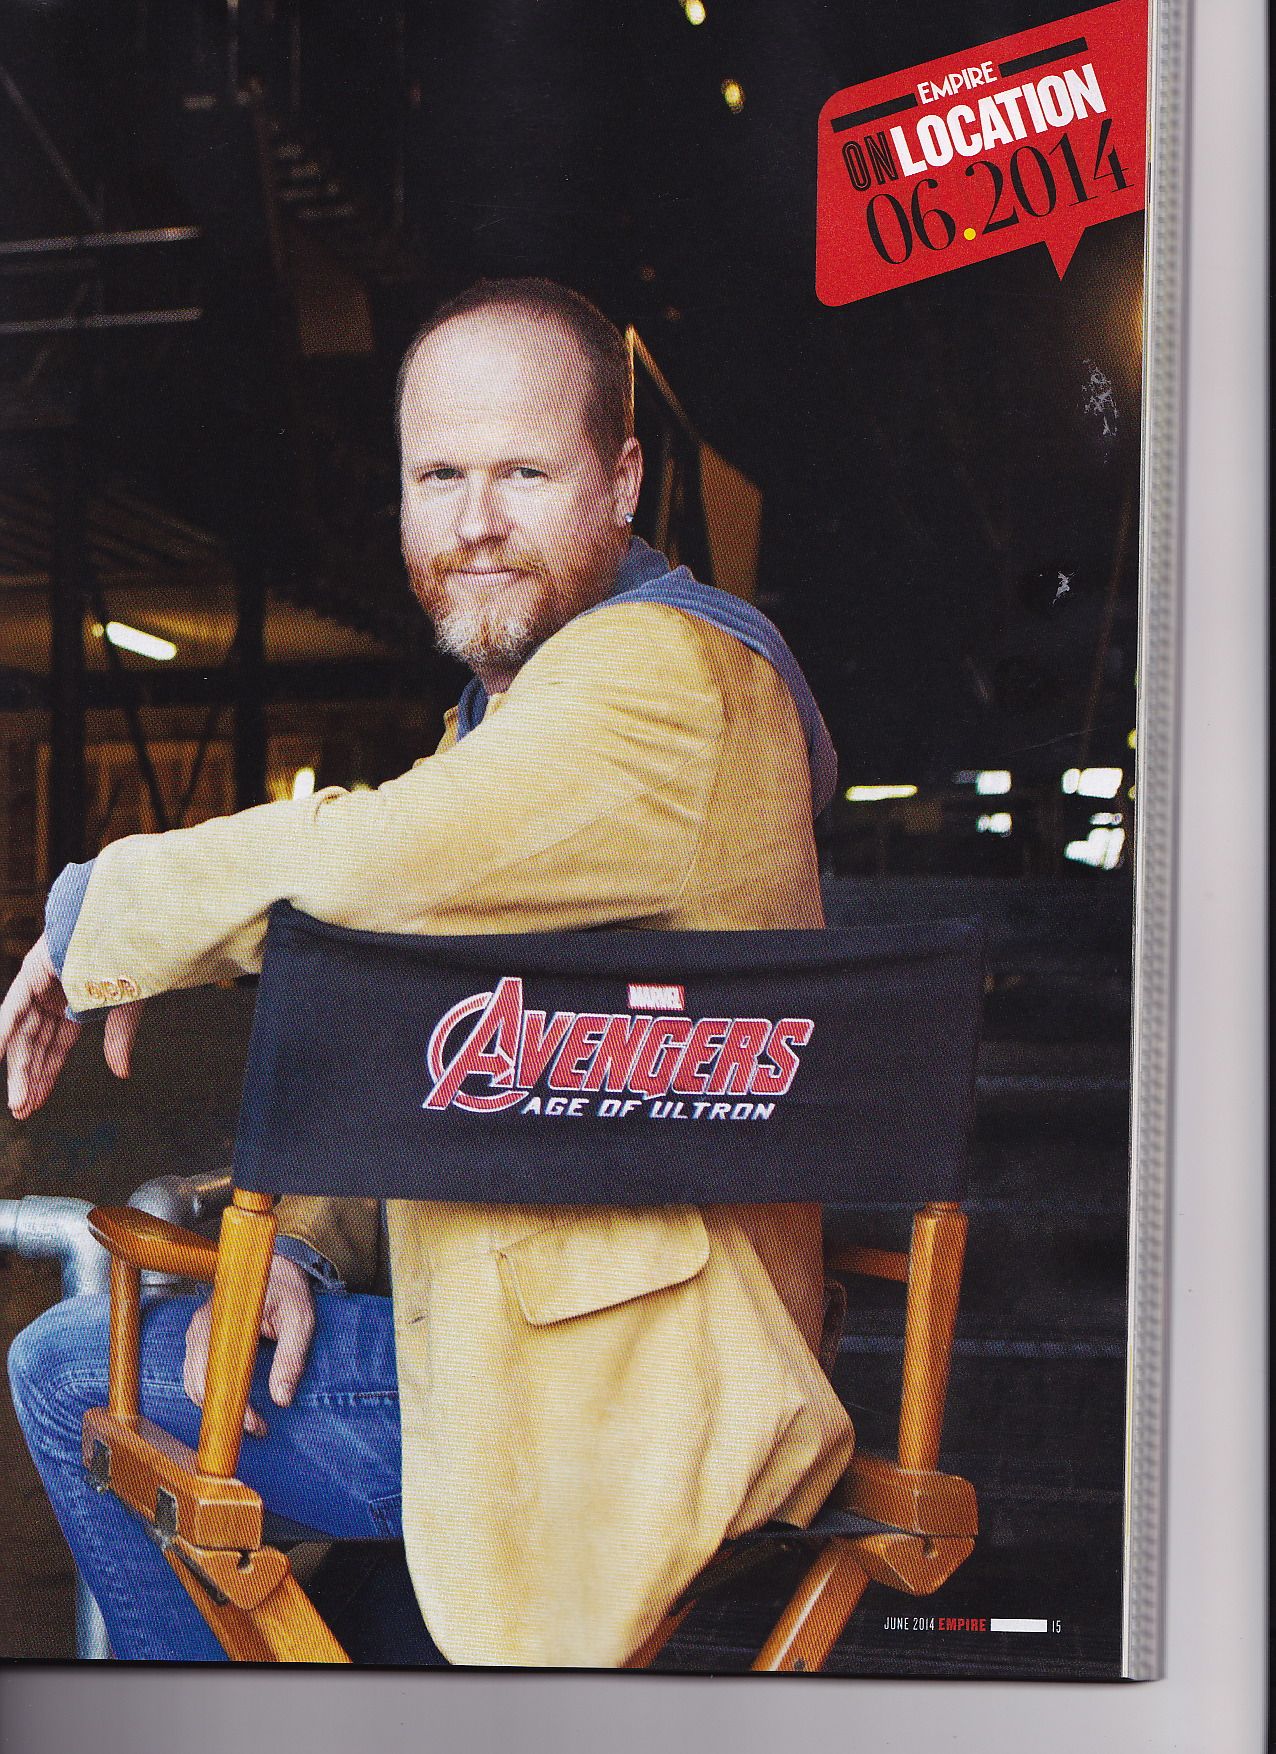 Avengers Age of Ultron Joss Whedon Photo